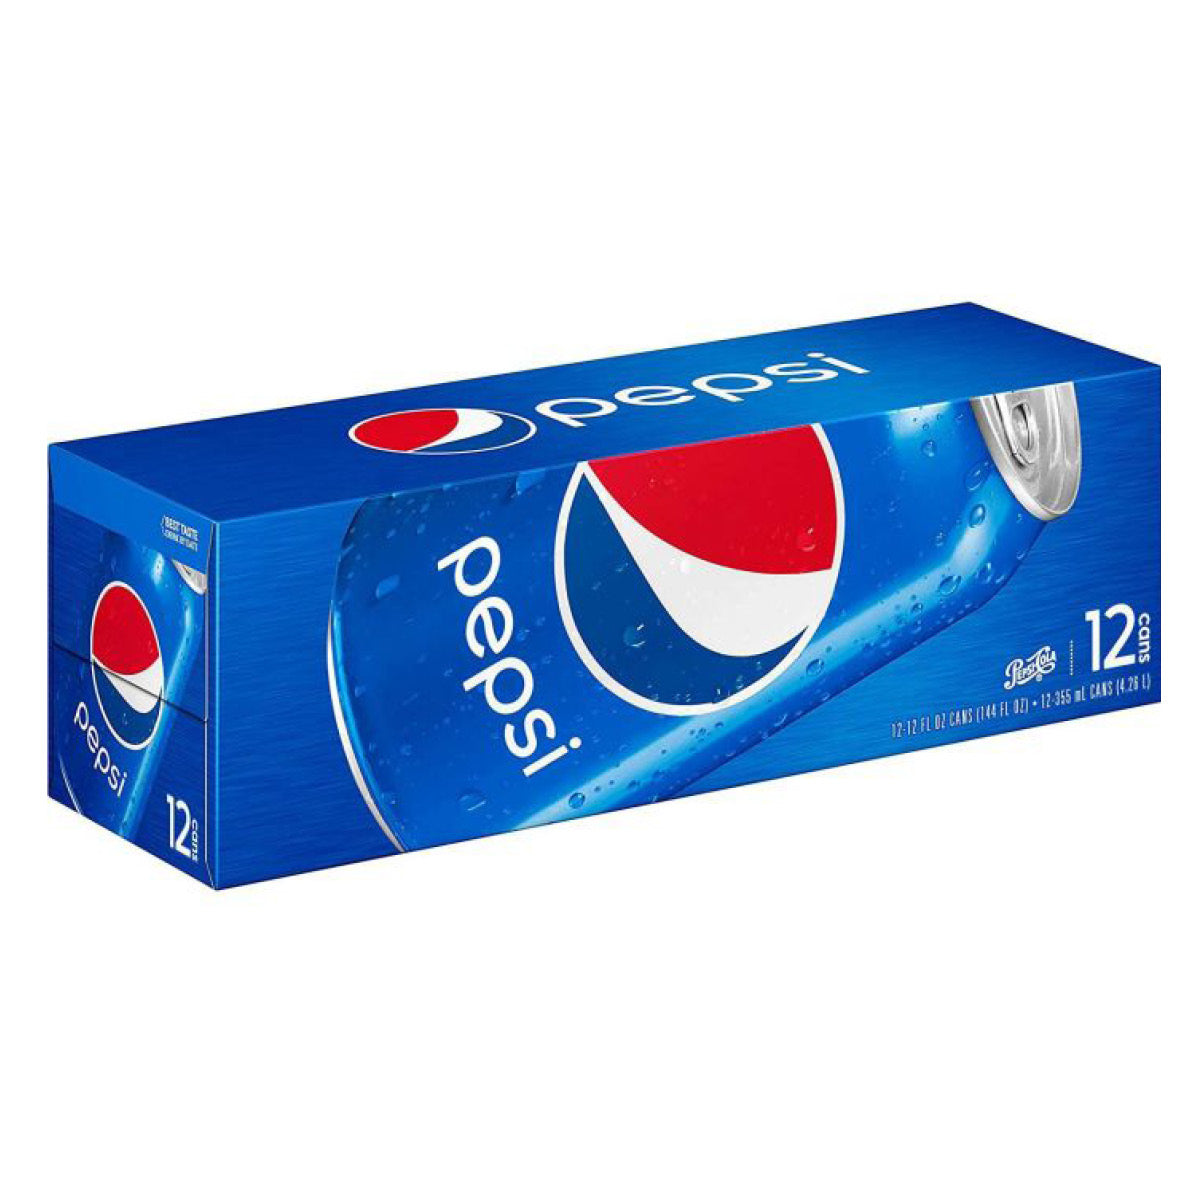 Pepsi 355ml x 12